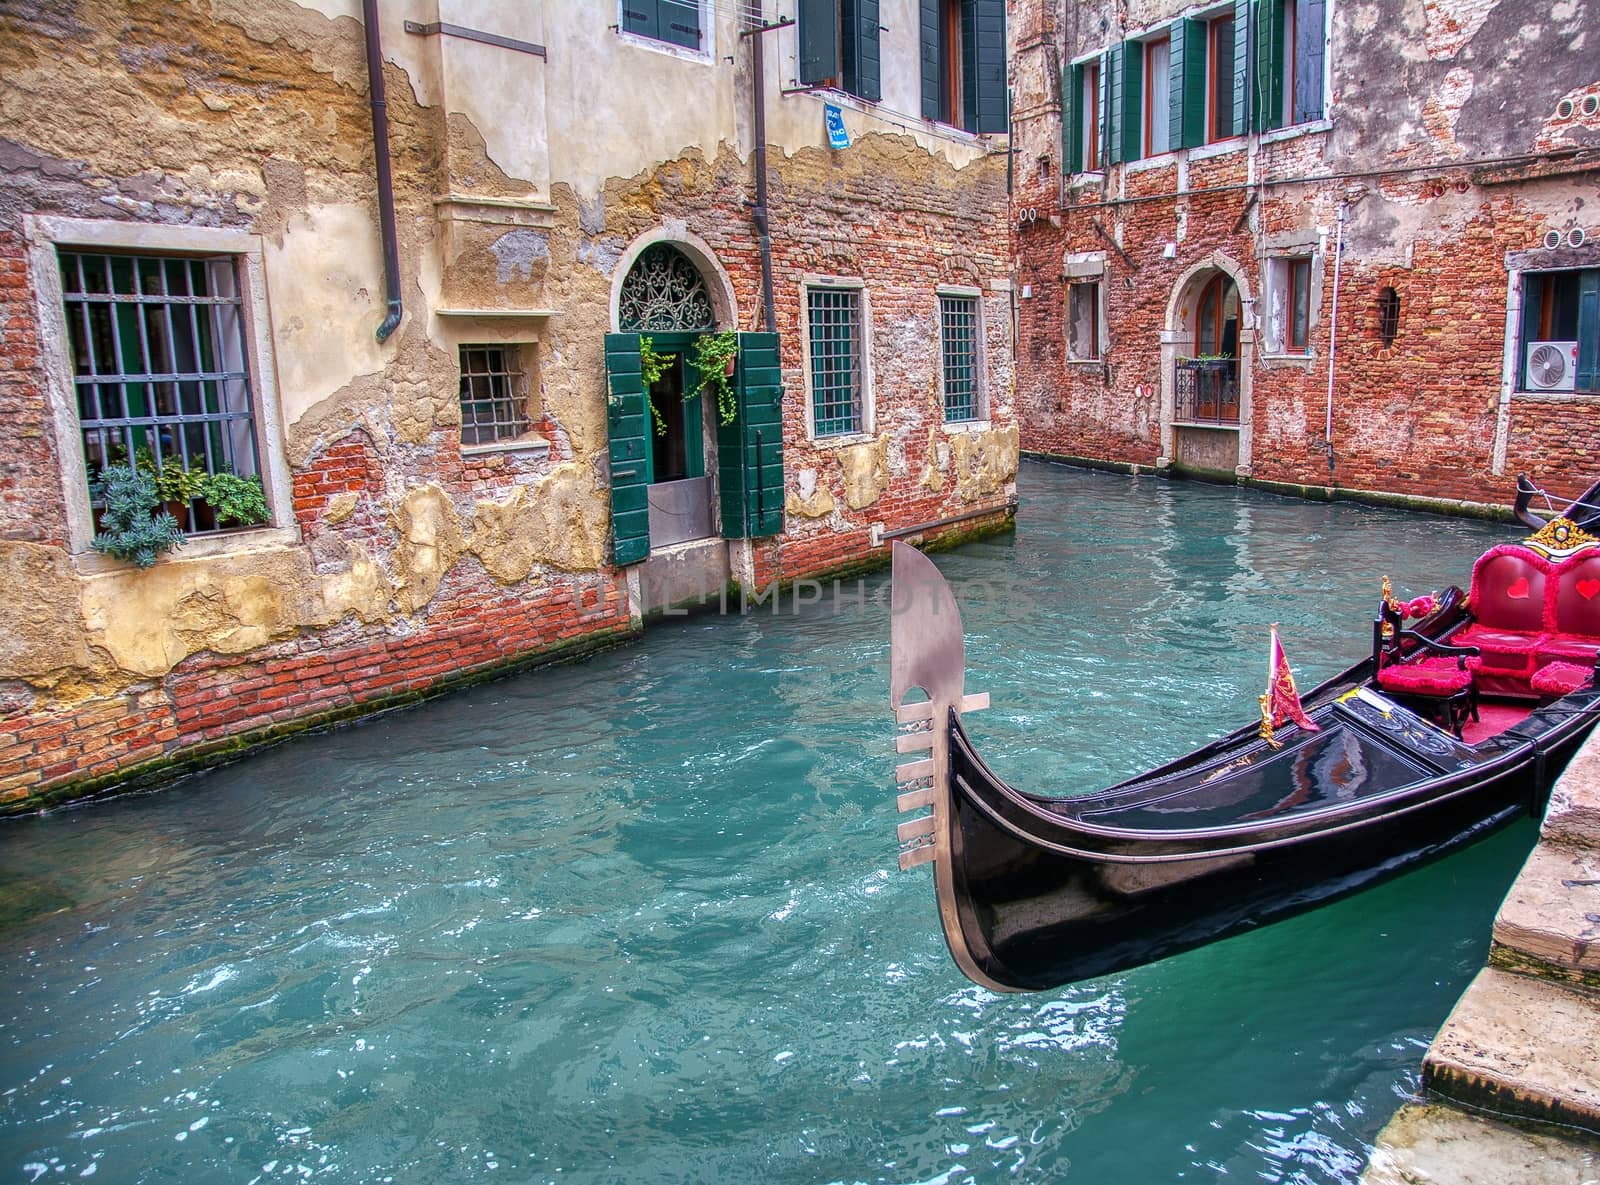 Gondola sailing through a canal in Venice. by CreativePhotoSpain